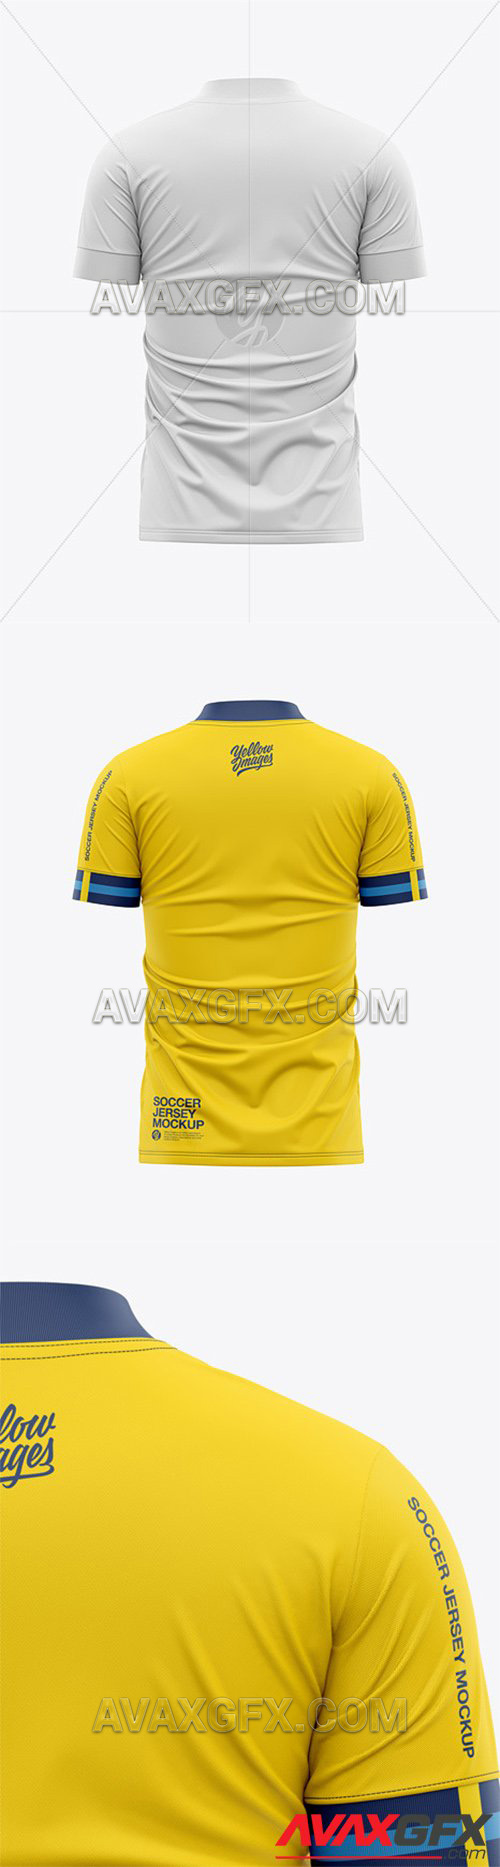 Men’s Soccer Jersey T-Shirt Mockup - Back View 56417